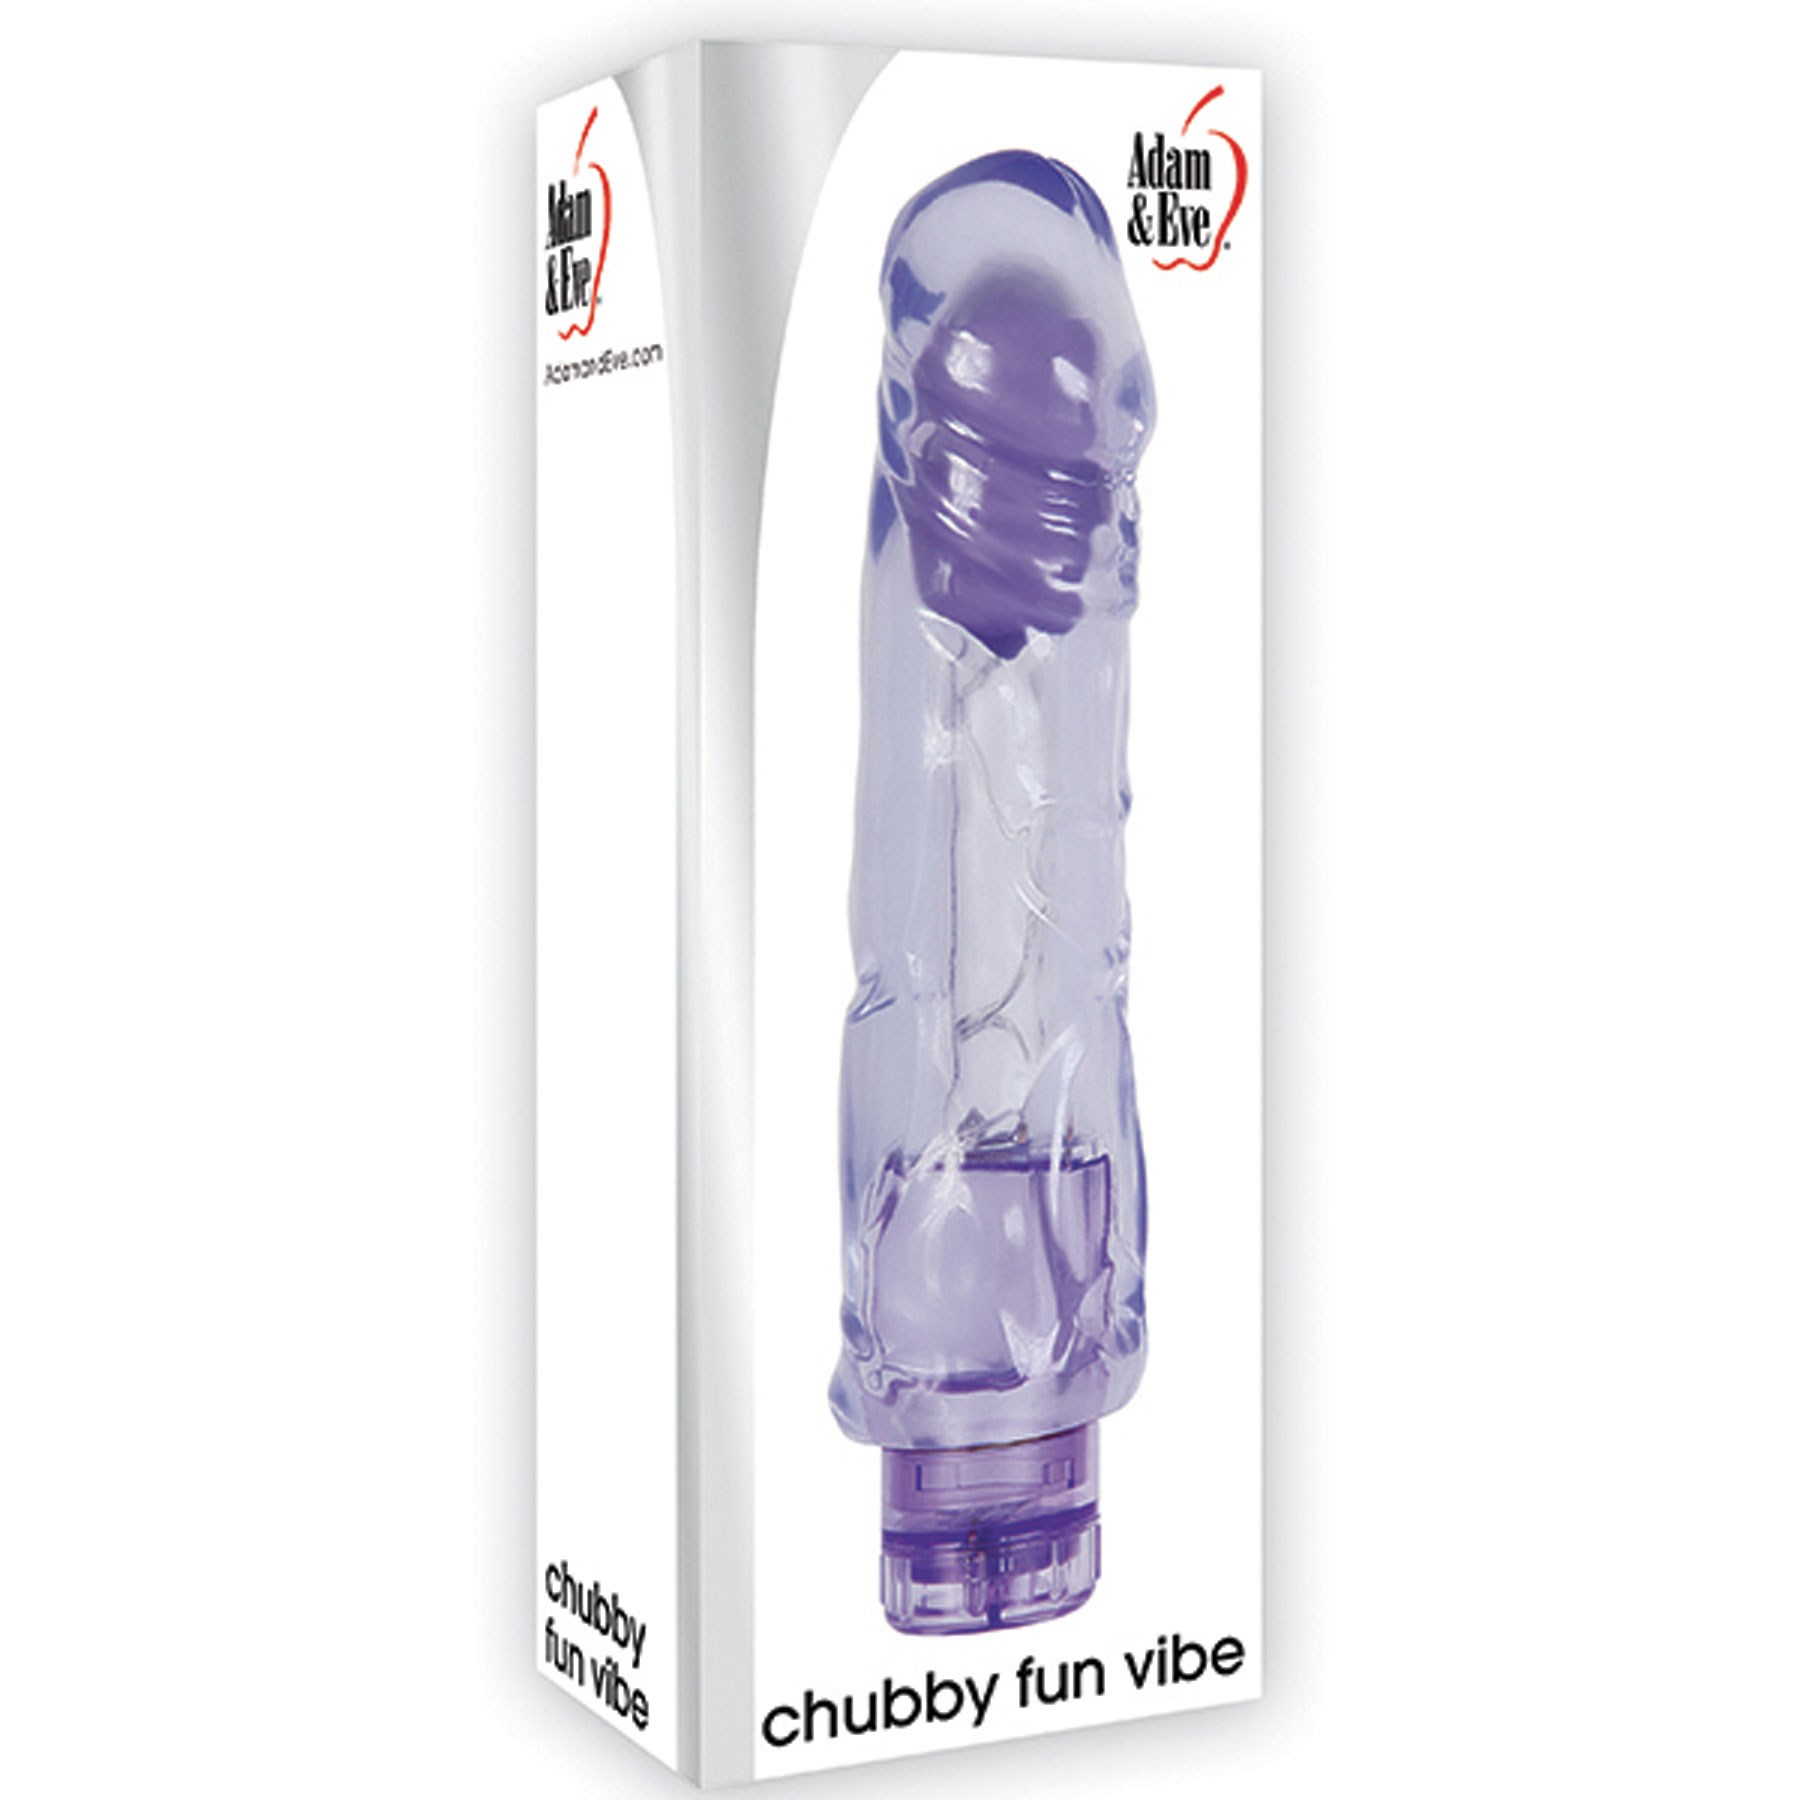 A&E Chubby Fun Vibe box